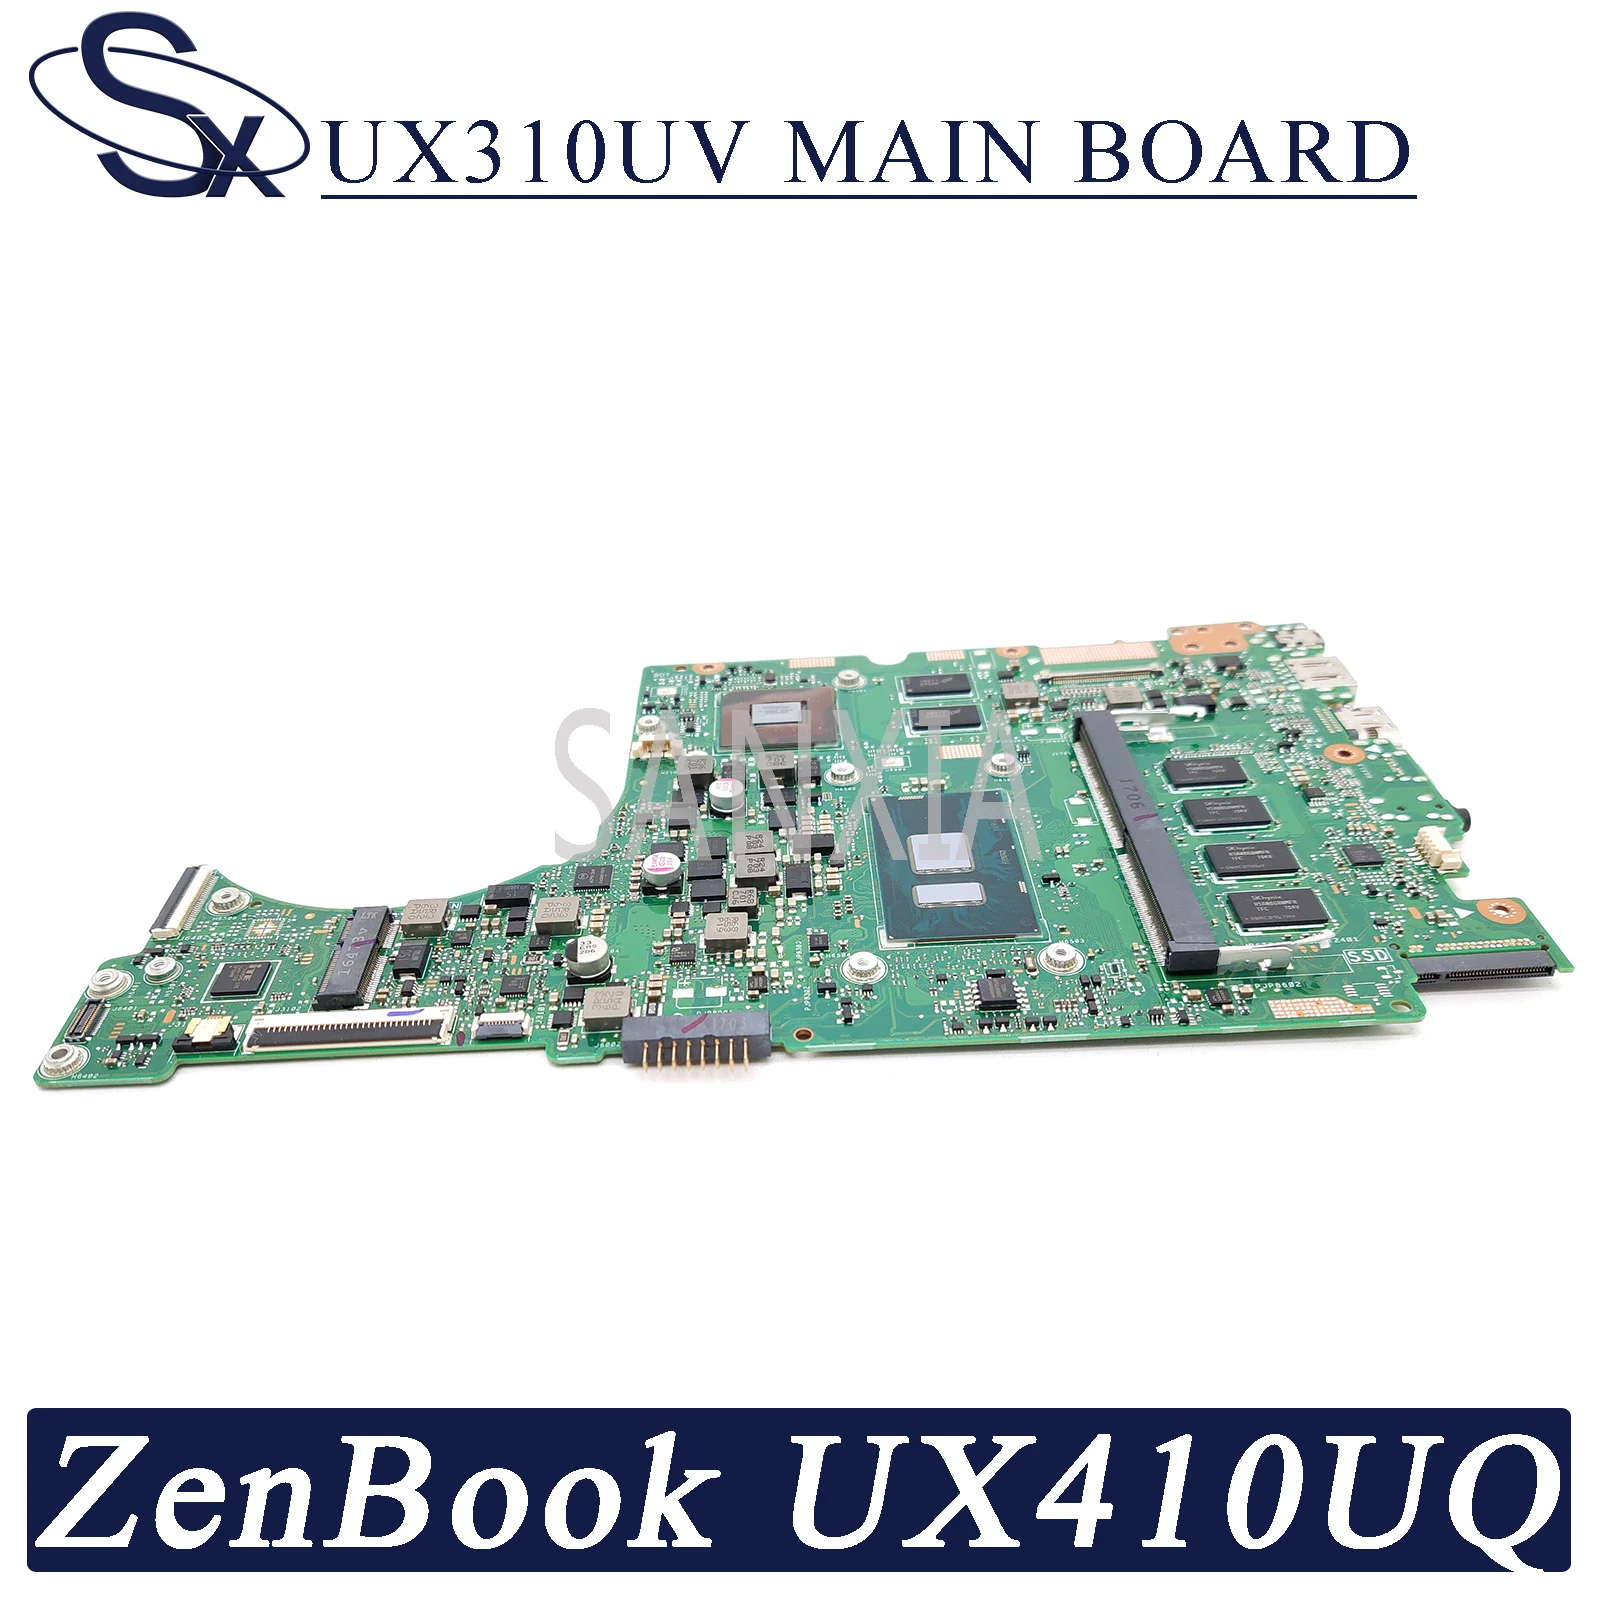 kefu ux310uv laptop motherboard for asus zenbook ux410uq 14 inch ux410u ux310u original mainboard 8gb ram i5 6200u gt940mx 2gb free global shipping